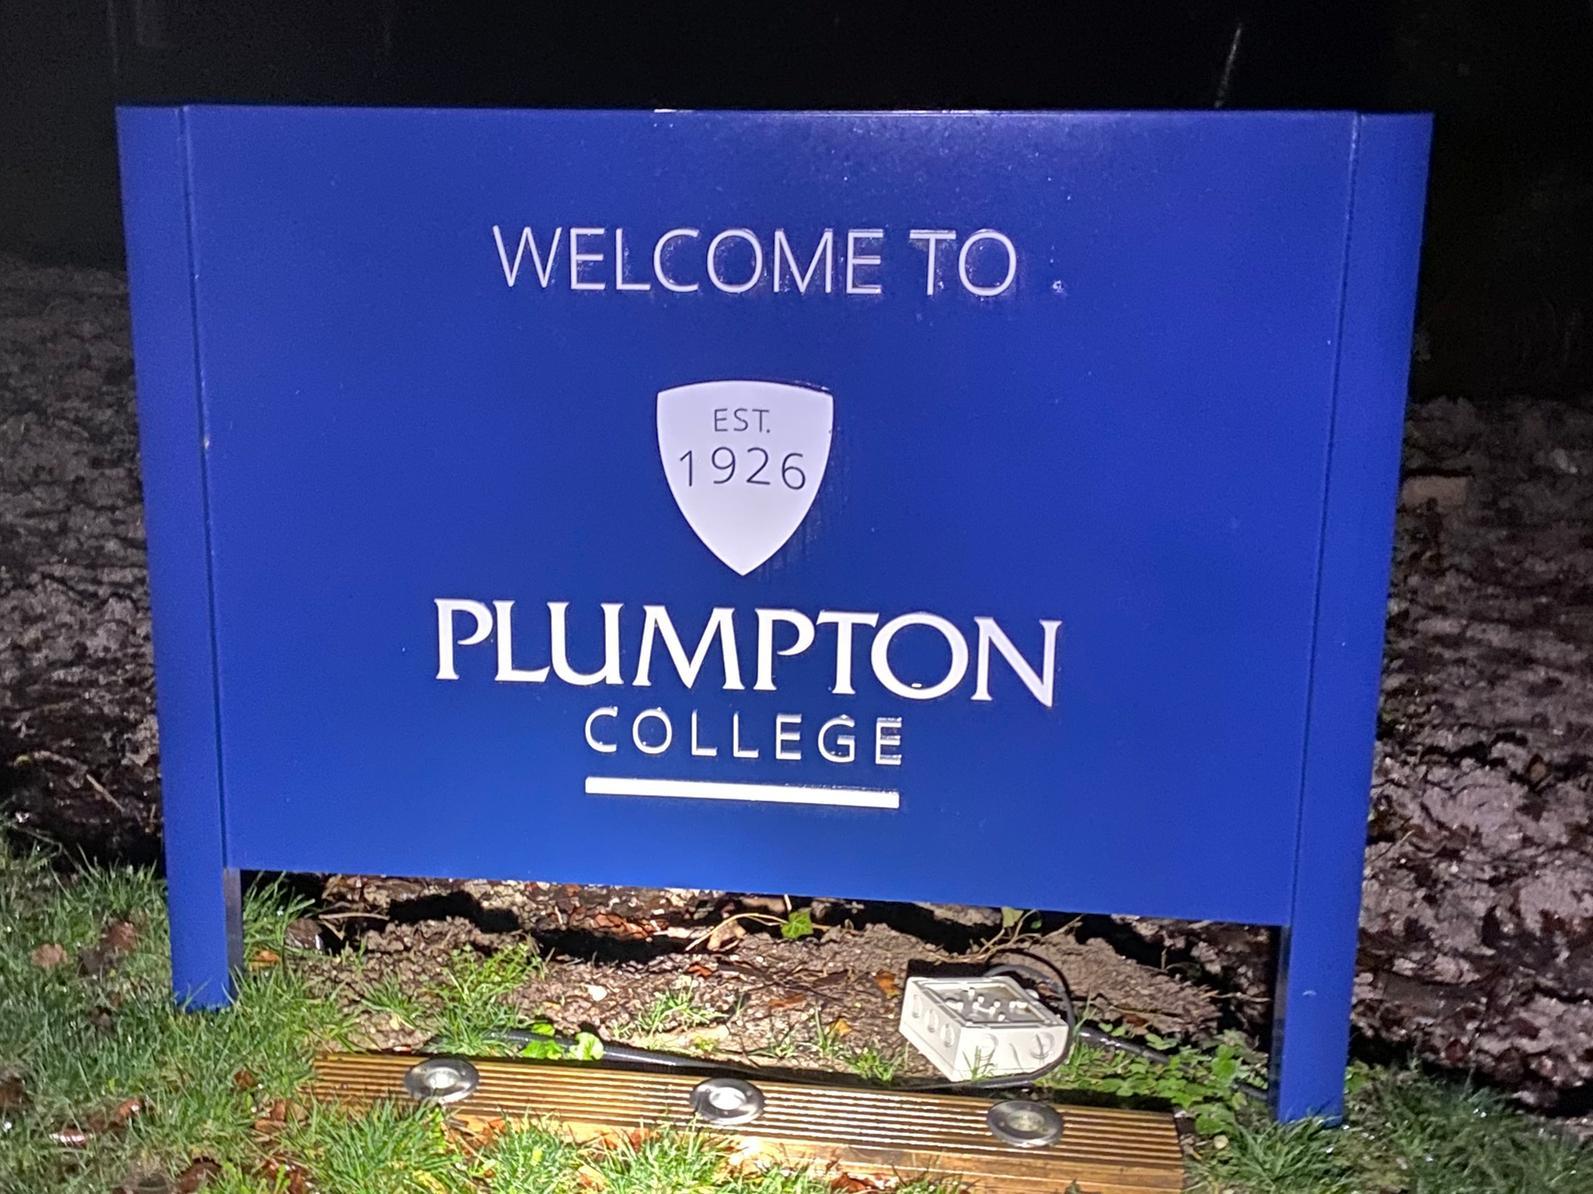 The Plumpton College sign